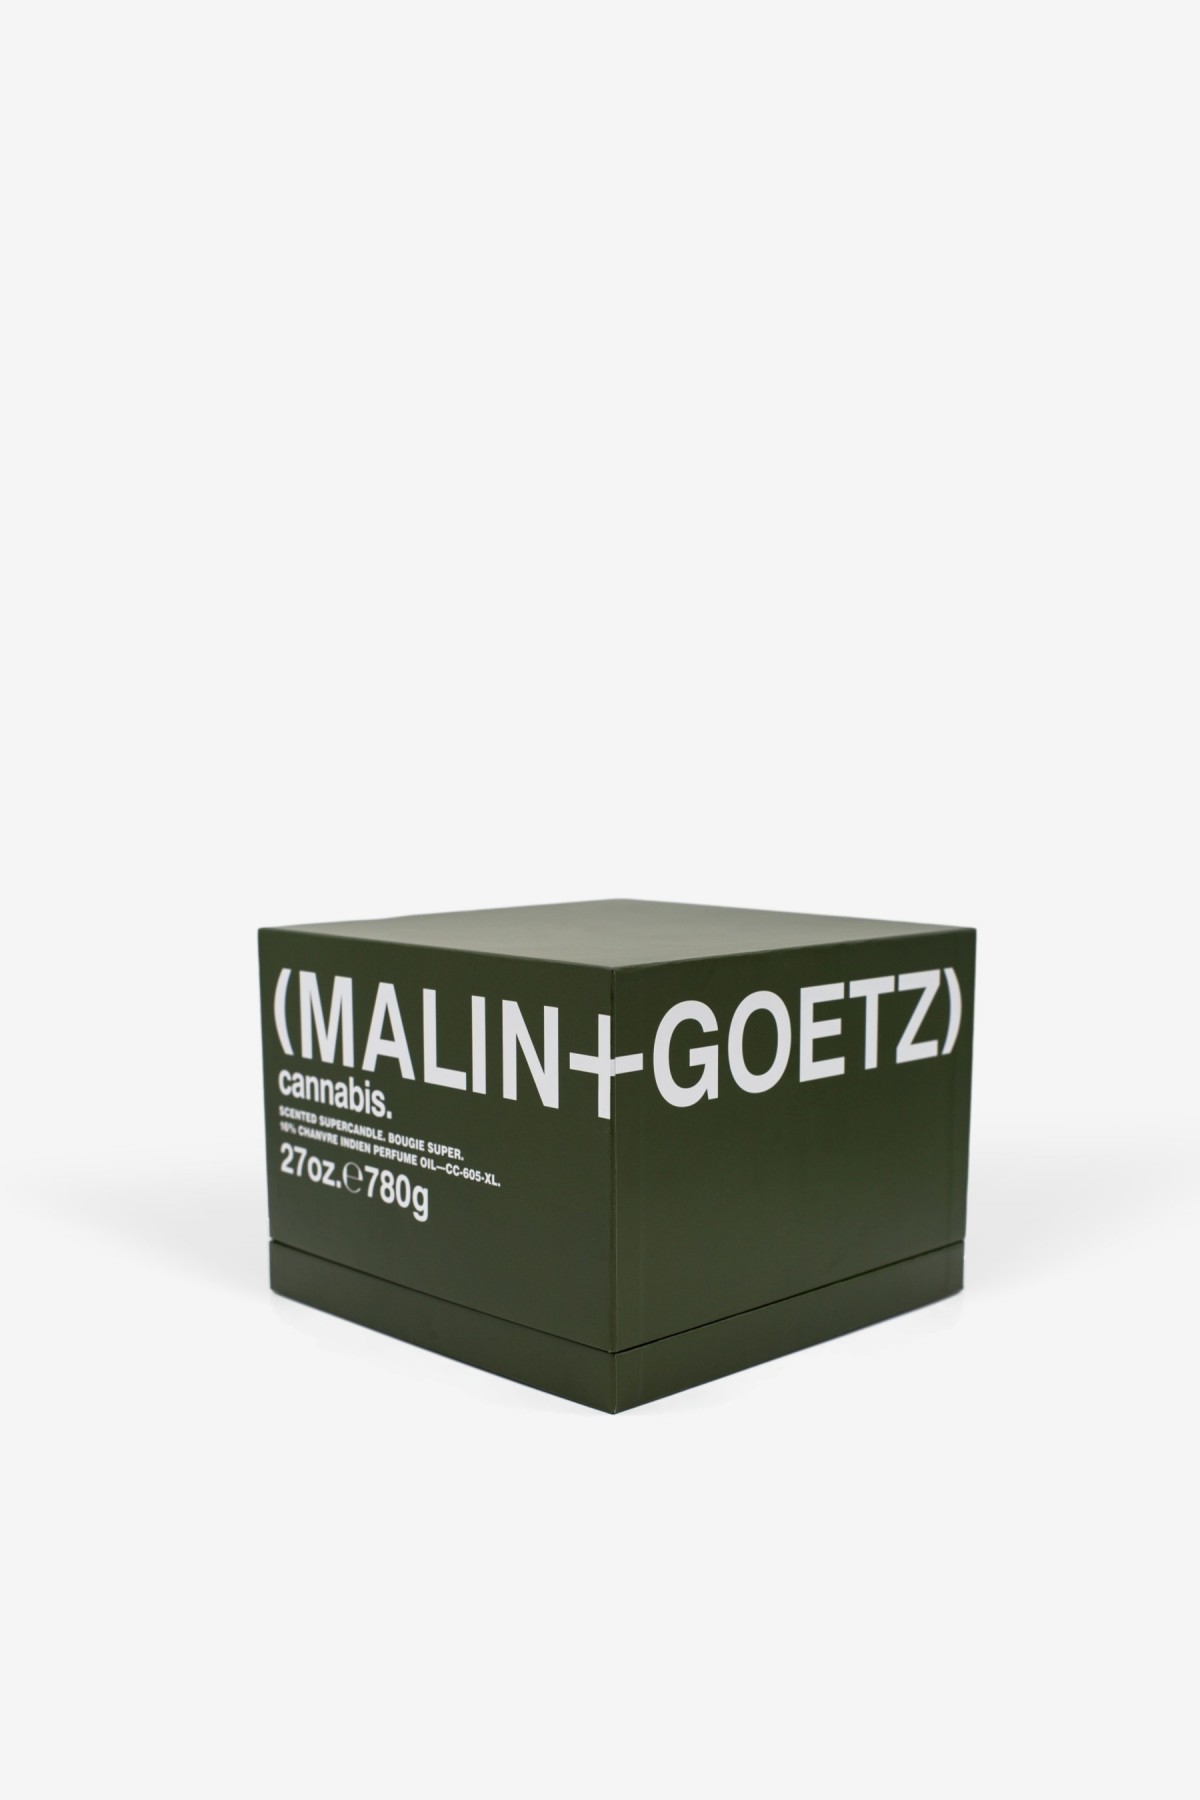 Malin+Goetz Cannabis Super Candle 780g in 